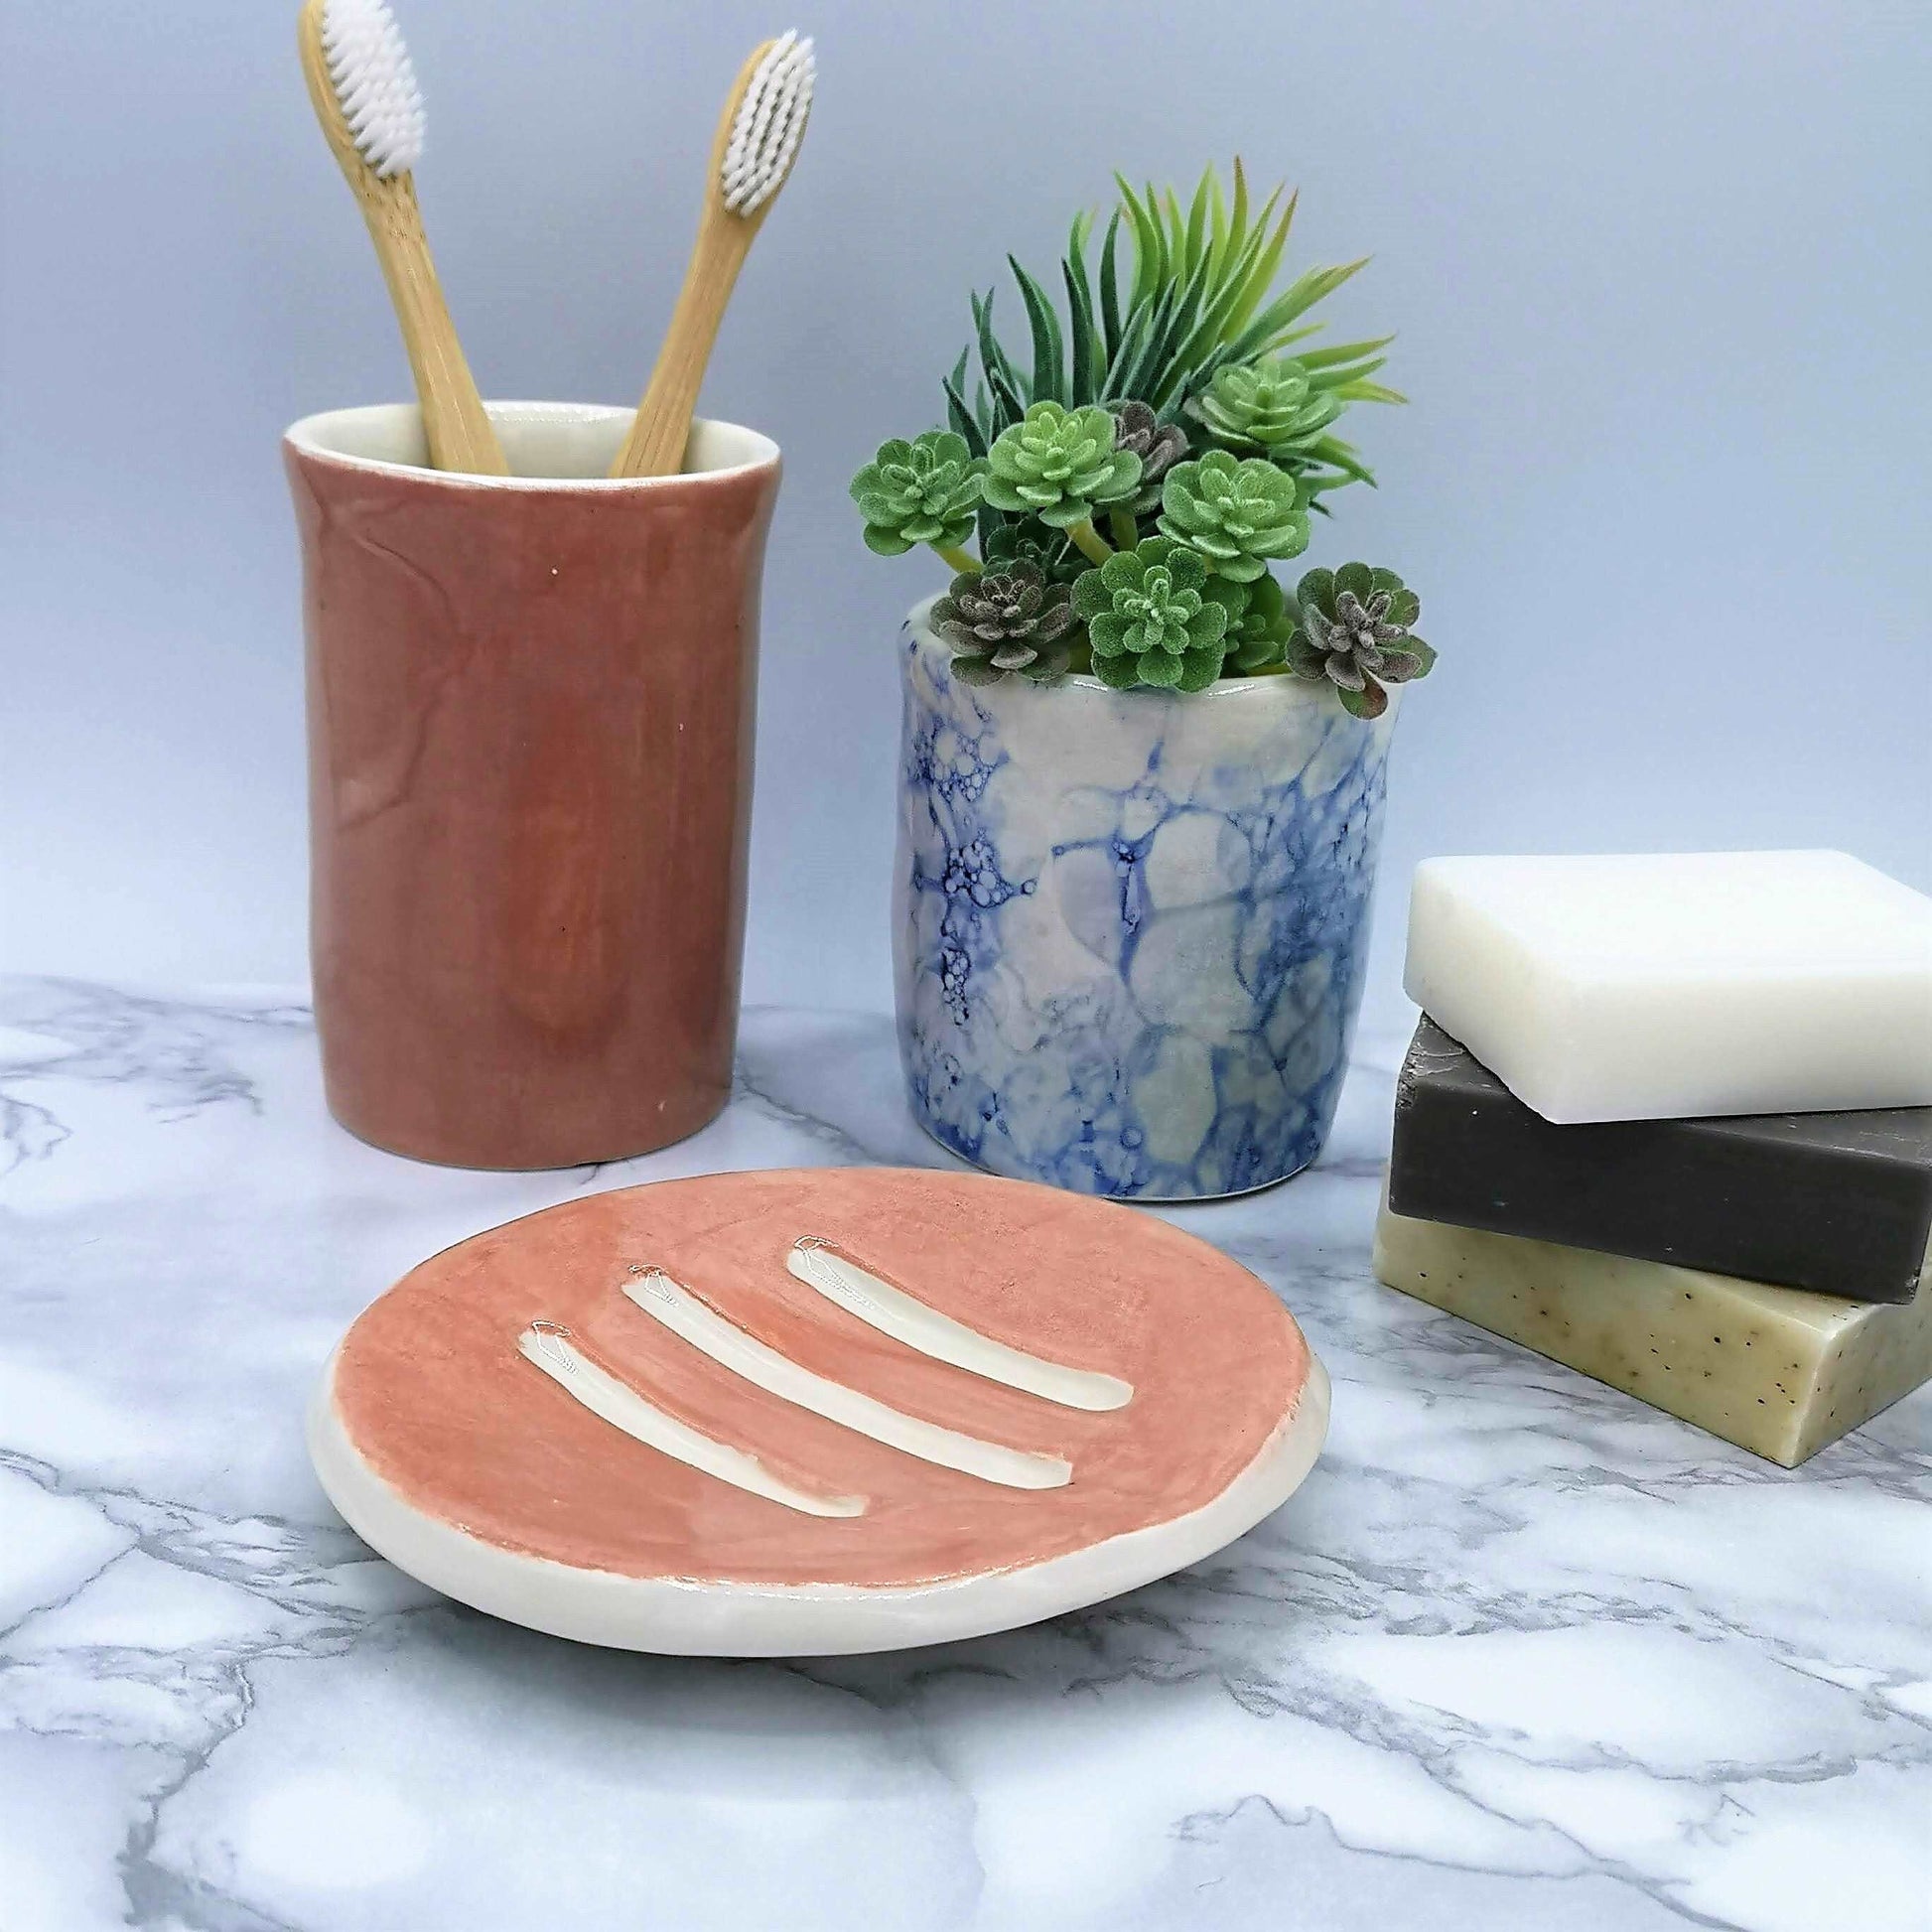 12cm/4.72in Handmade Ceramic Round Pink Soap Bar Holder For Bathroom Decor, Clay Soap Dish Drain, Eco Friendly Zero Waste Pottery Soap Tray